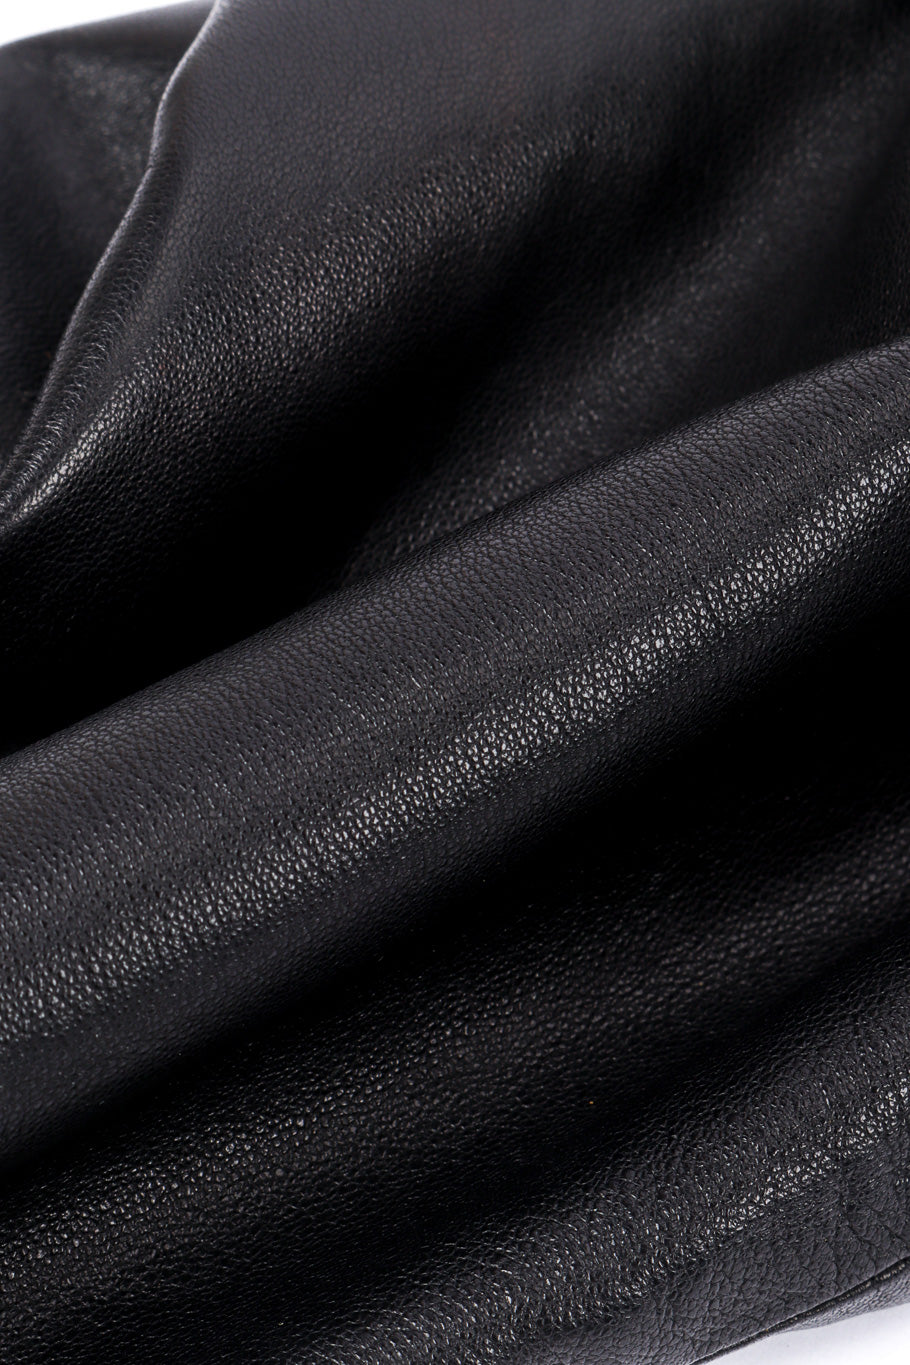 Vintage Lina Lee Studded Leather Jacket fabric closeup @recessla